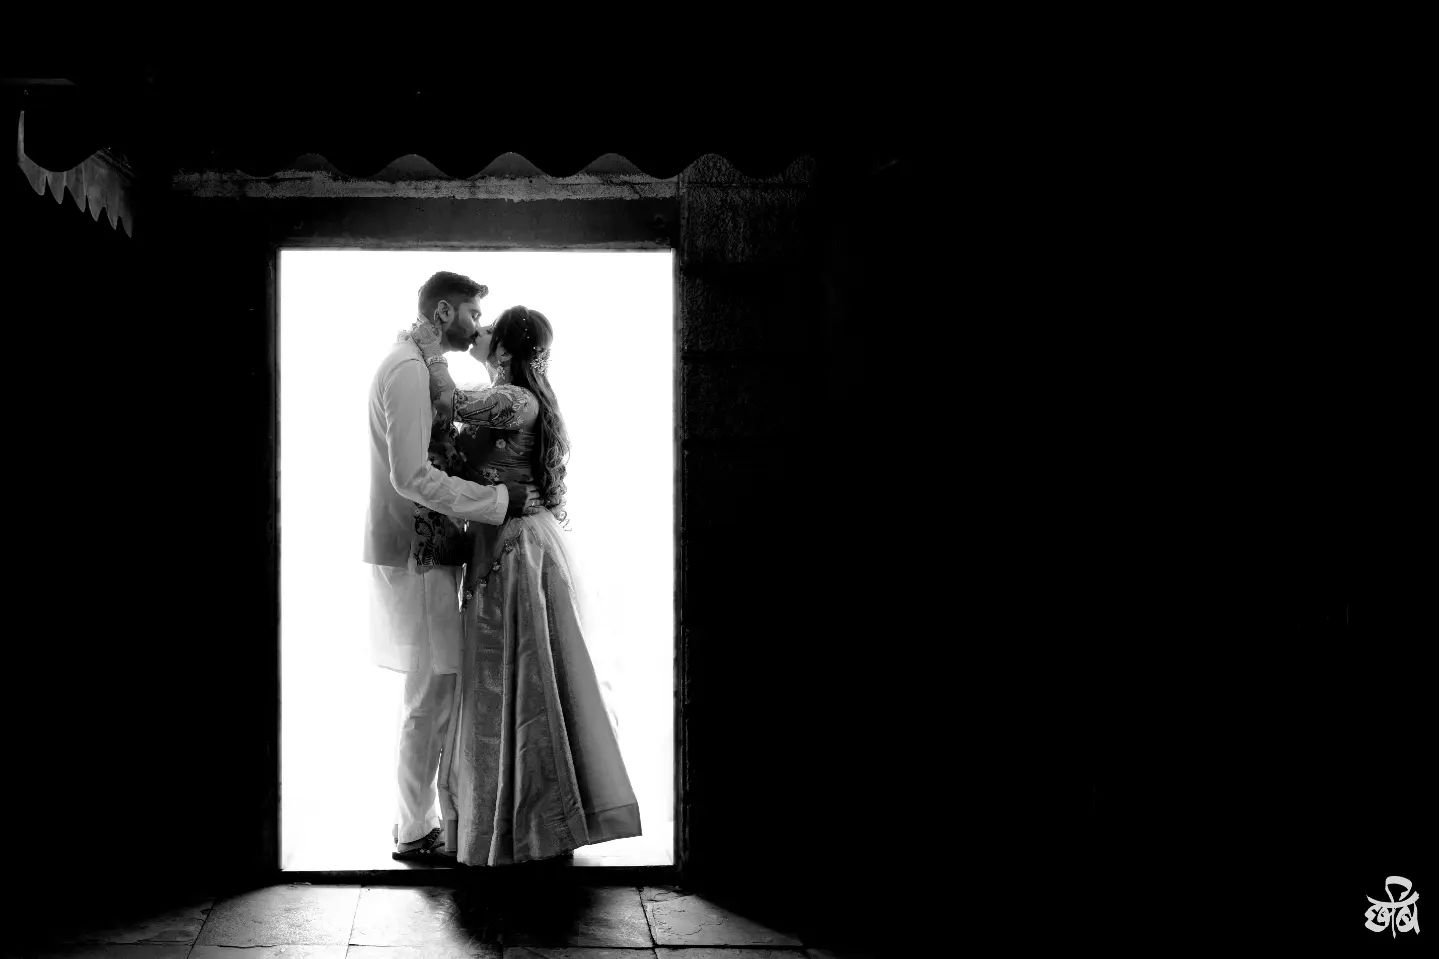 Nirja + Mohit
.
@nirjapatel_
@mohitagola99 
.
.
.

#weddingwireindia #thebridestory #weddinginspiration #preweddingphotography #preweddingideas #indian_wedding_inspiration #shaadisaga #shaadiseason  #reflectionphotography #bridetobe #preweddingshoot 